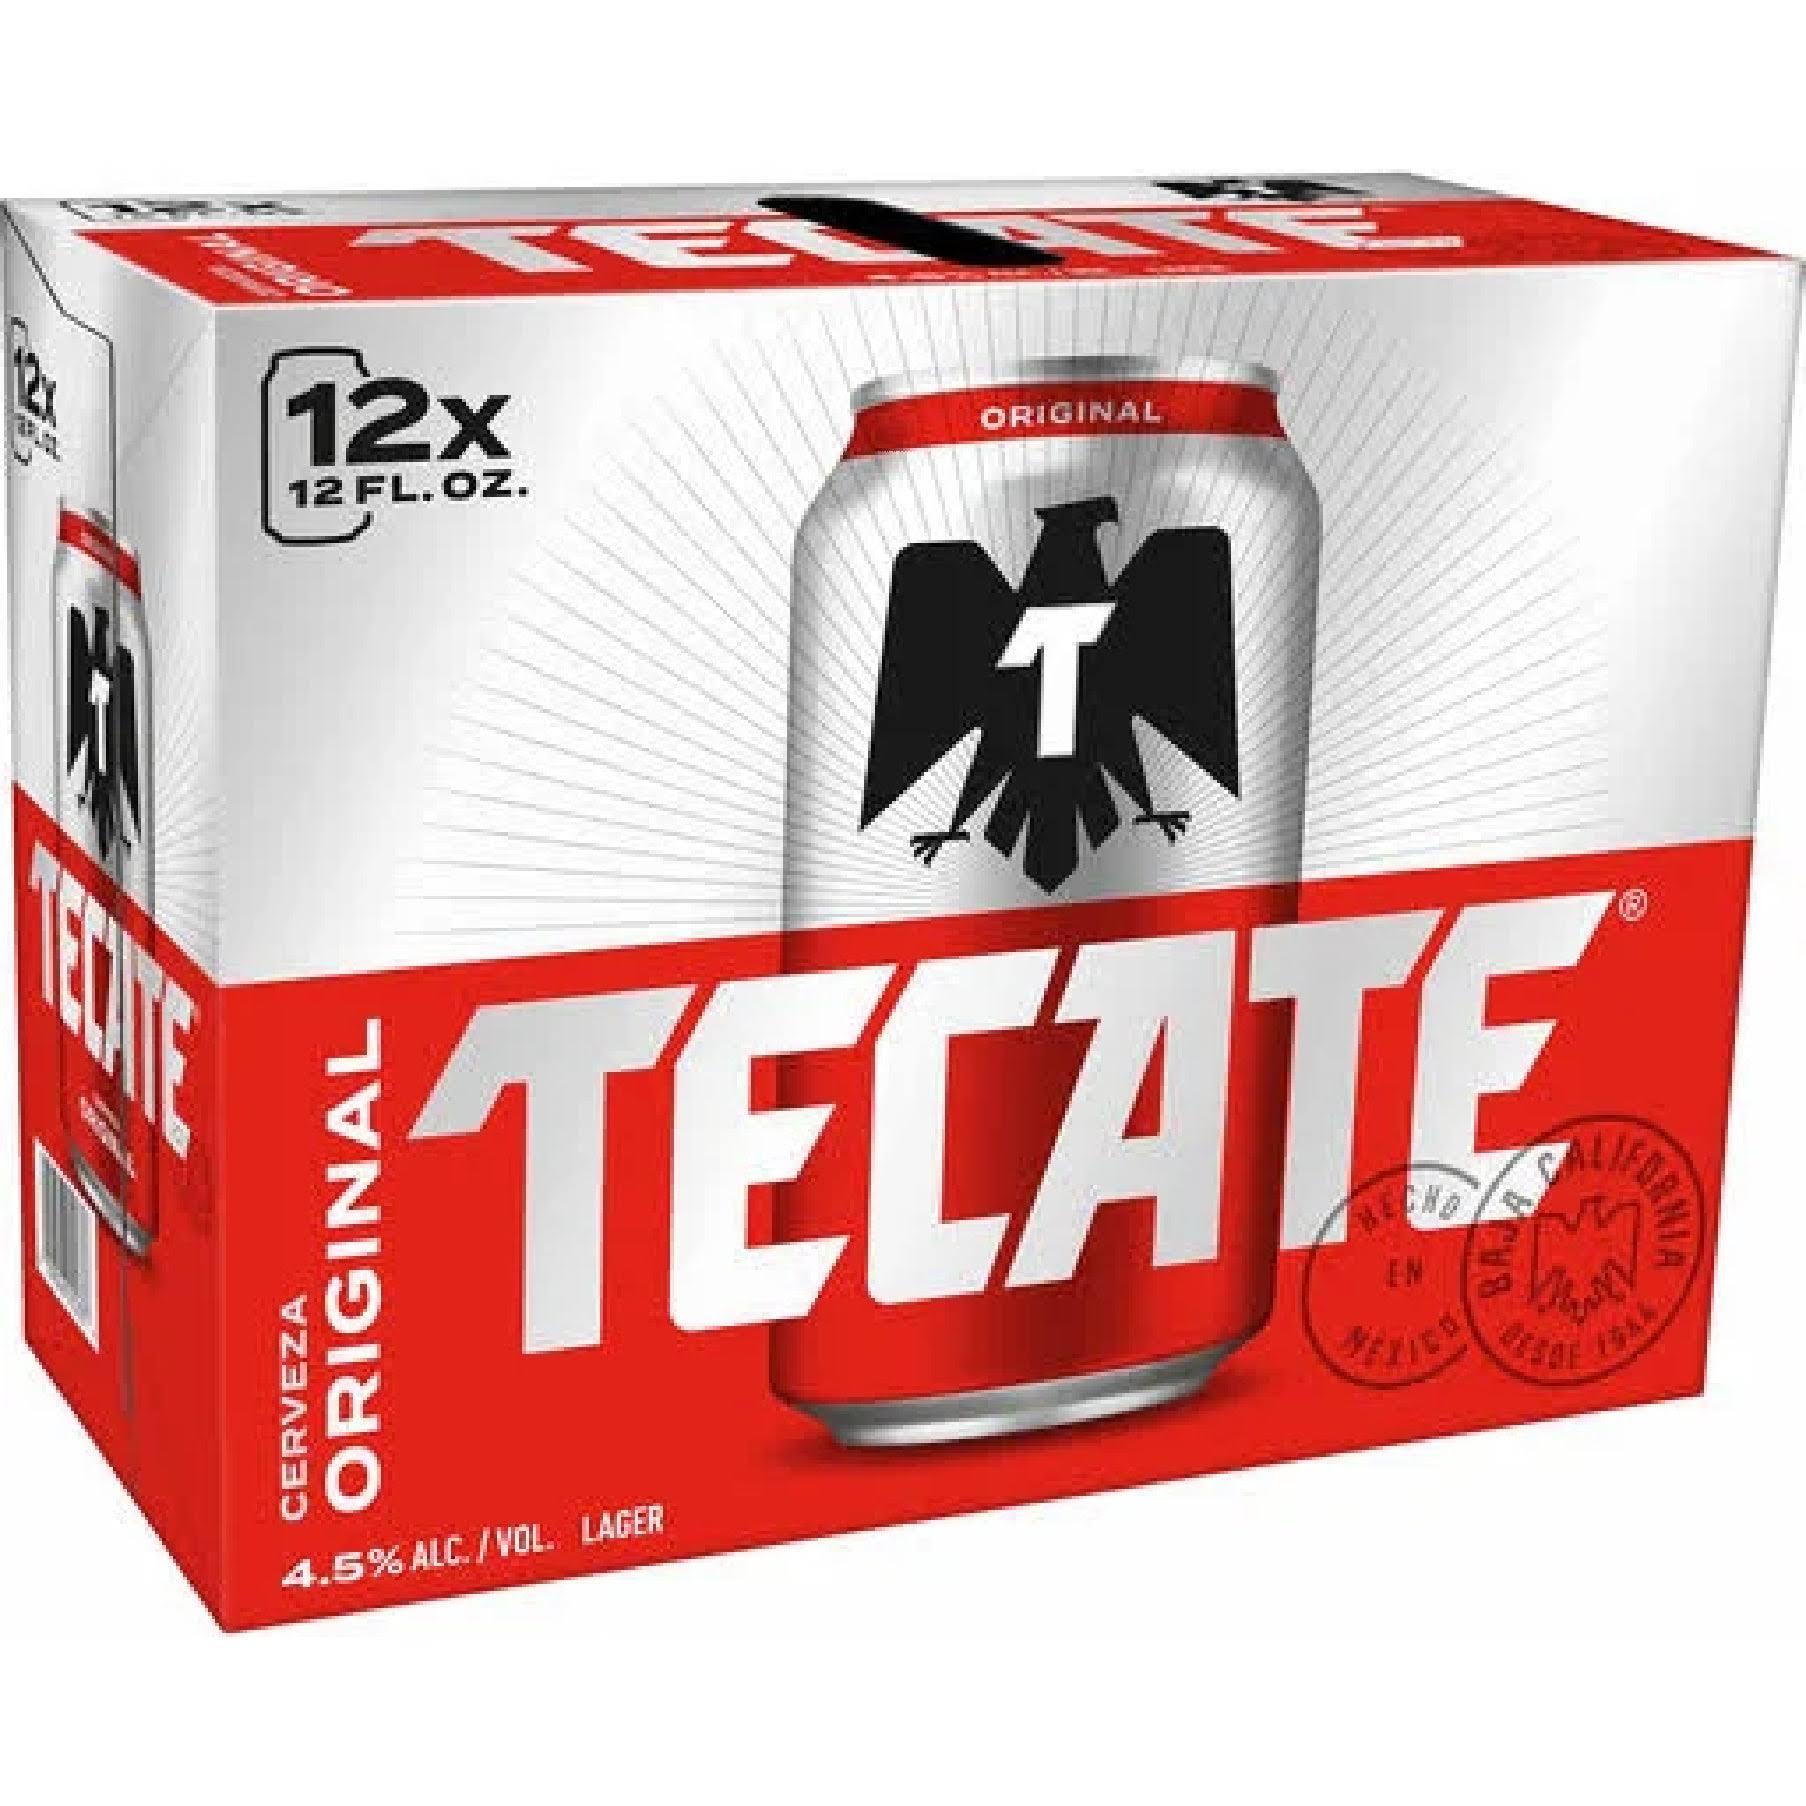 Tecate Mexican Beer - 12 Pack